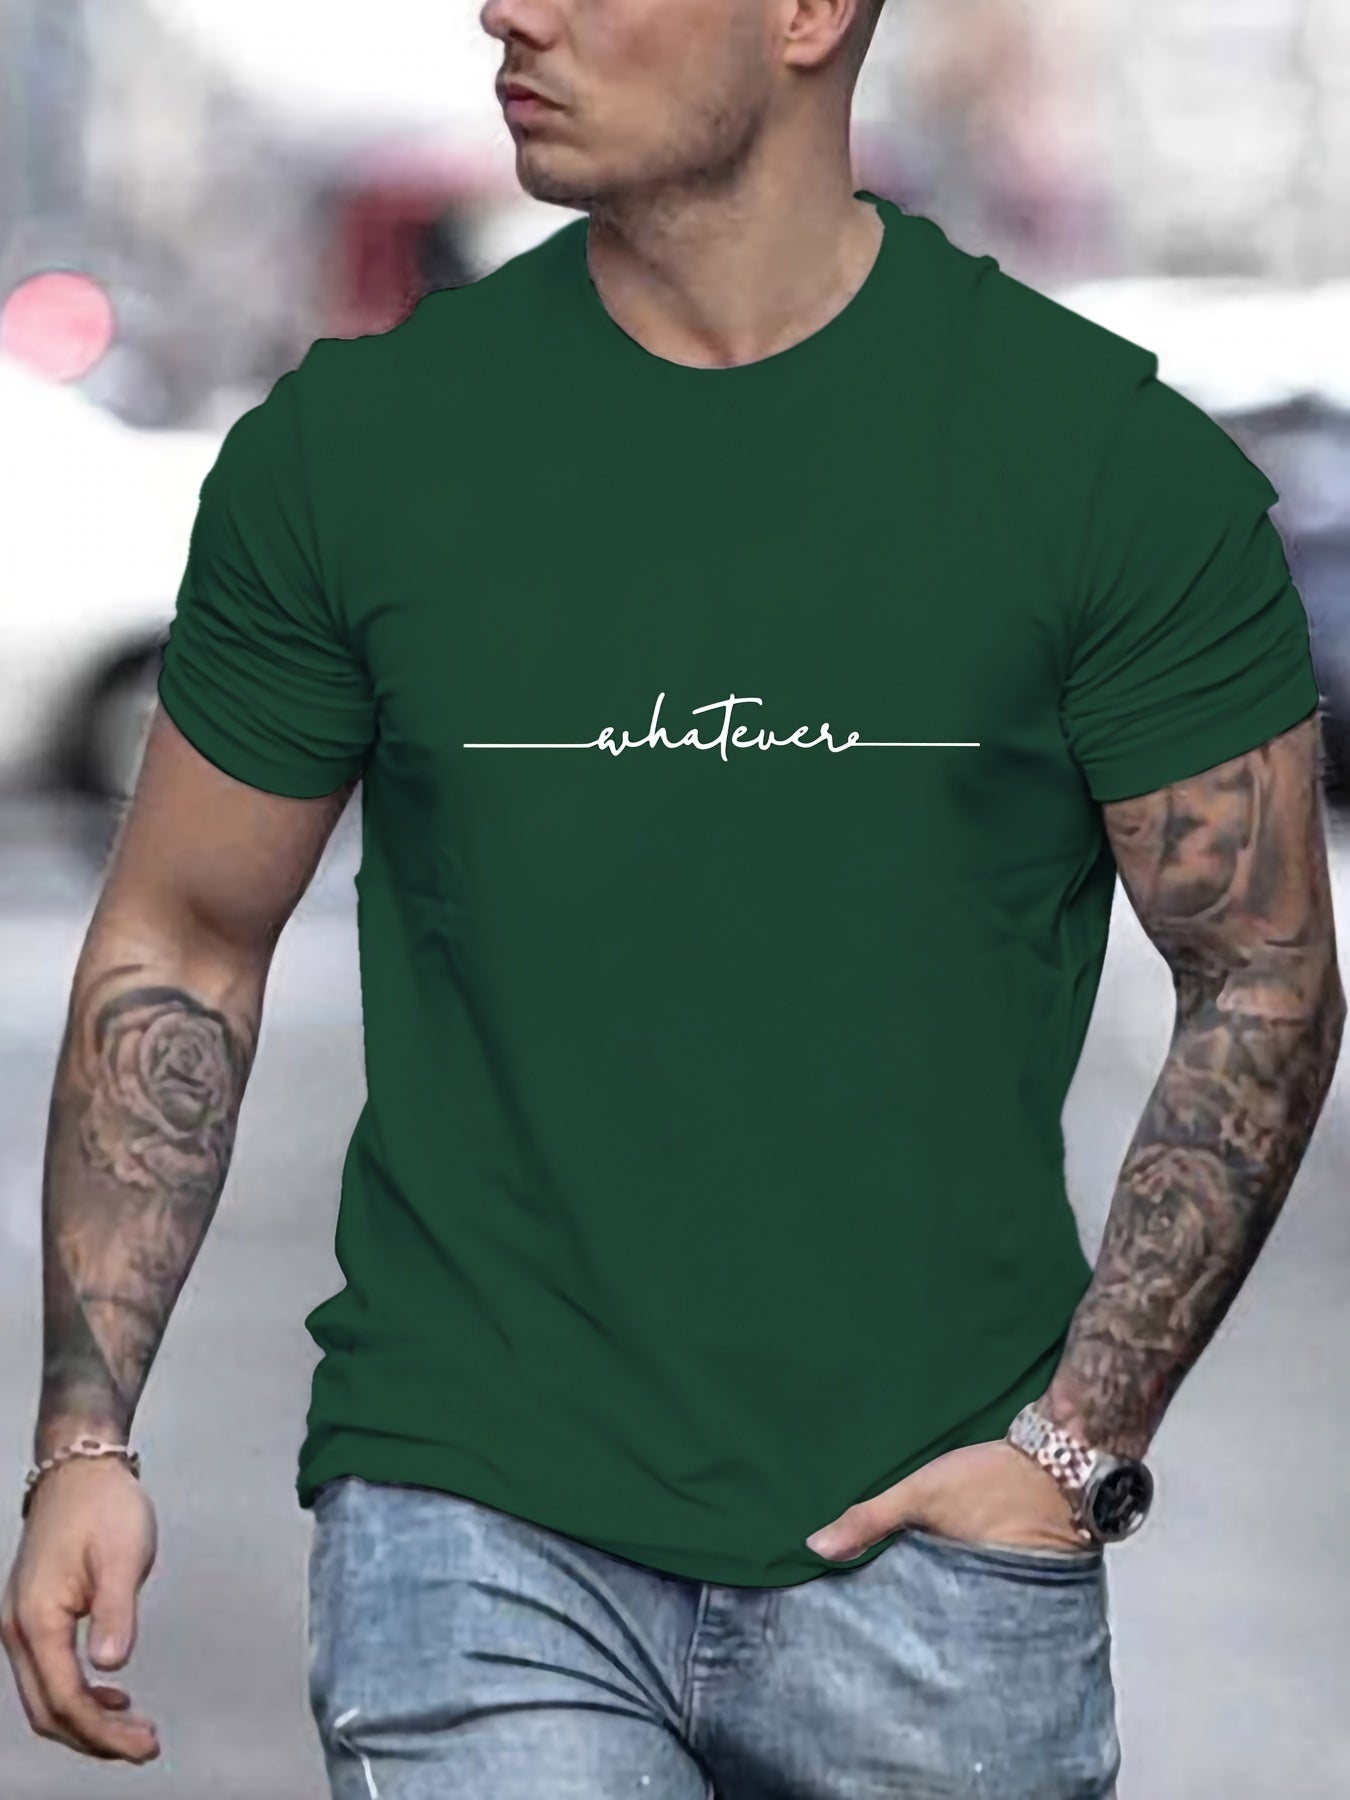 「binfenxie」Men's "Whatever" Short Sleeve T-shirt, Crew Neck Tee Casual Clothing, Summer